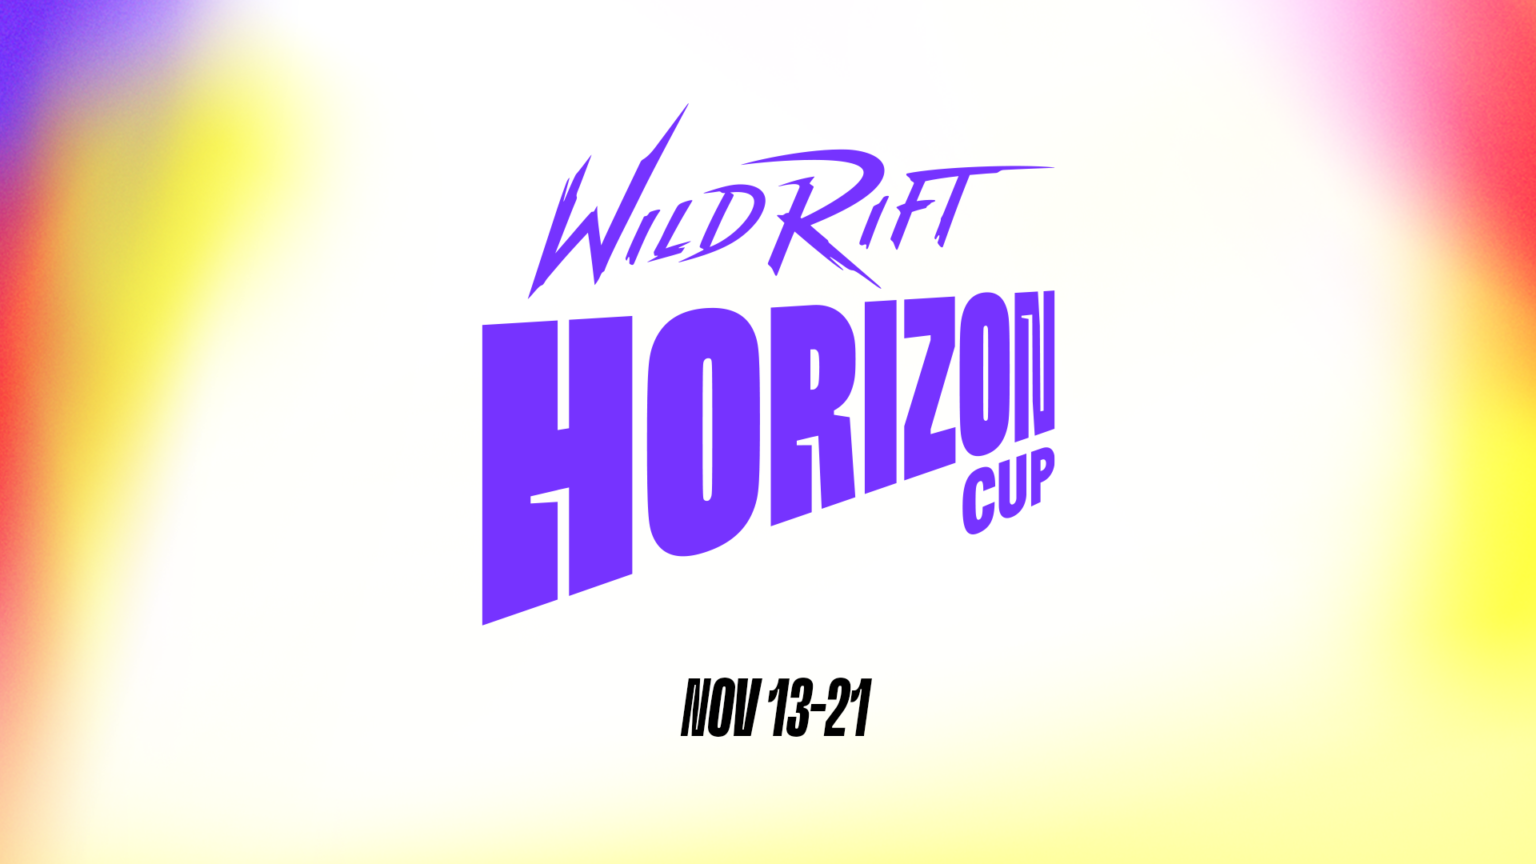 Come guardare League of Legends: Wild Rift Horizon Cup!